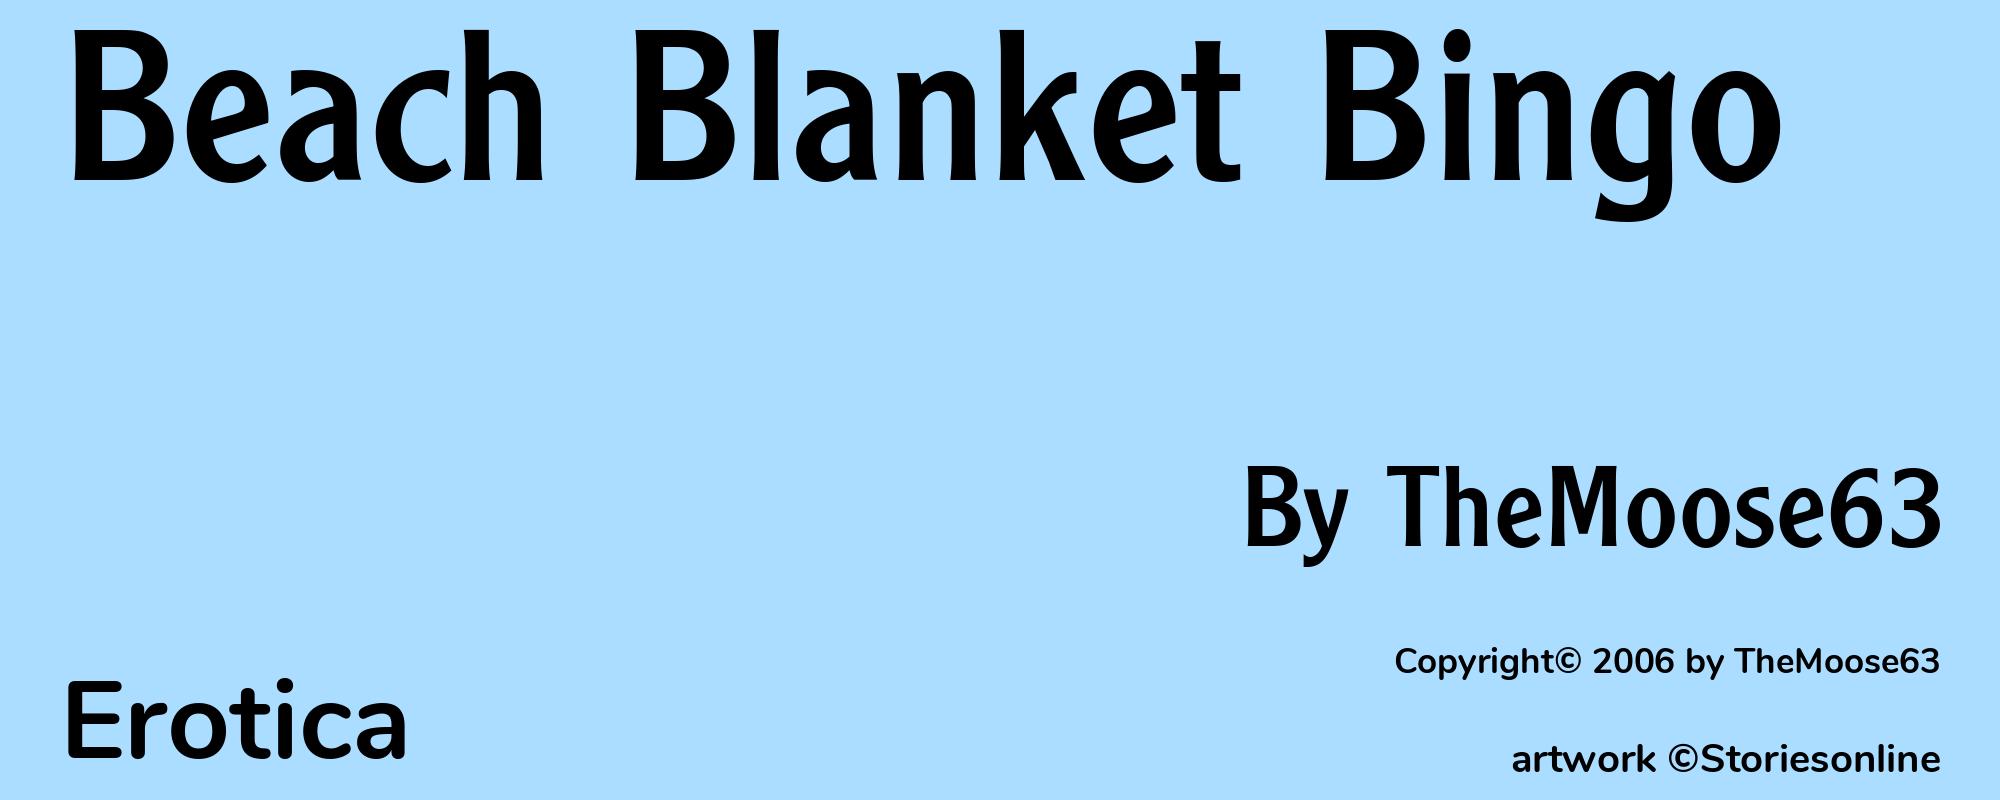 Beach Blanket Bingo - Cover